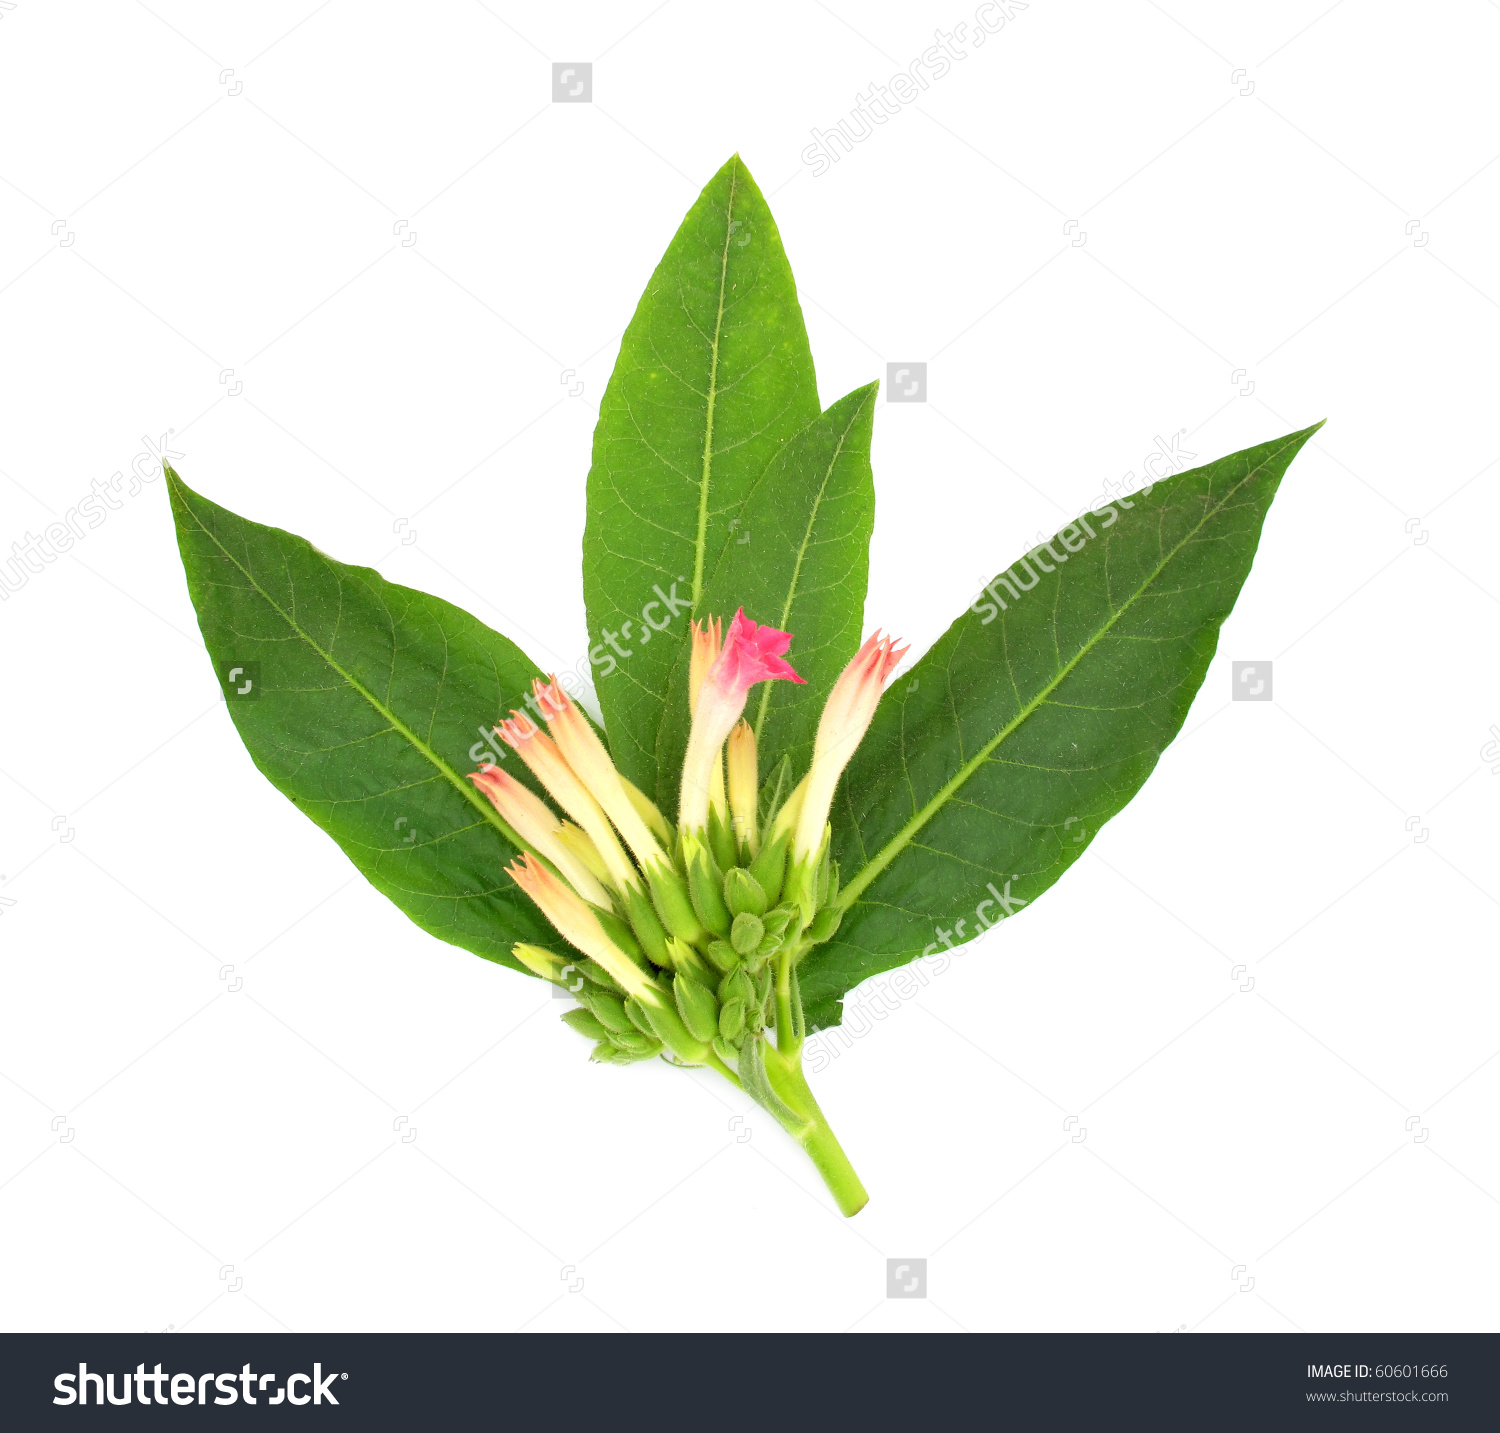 clip art tobacco leaf - photo #6